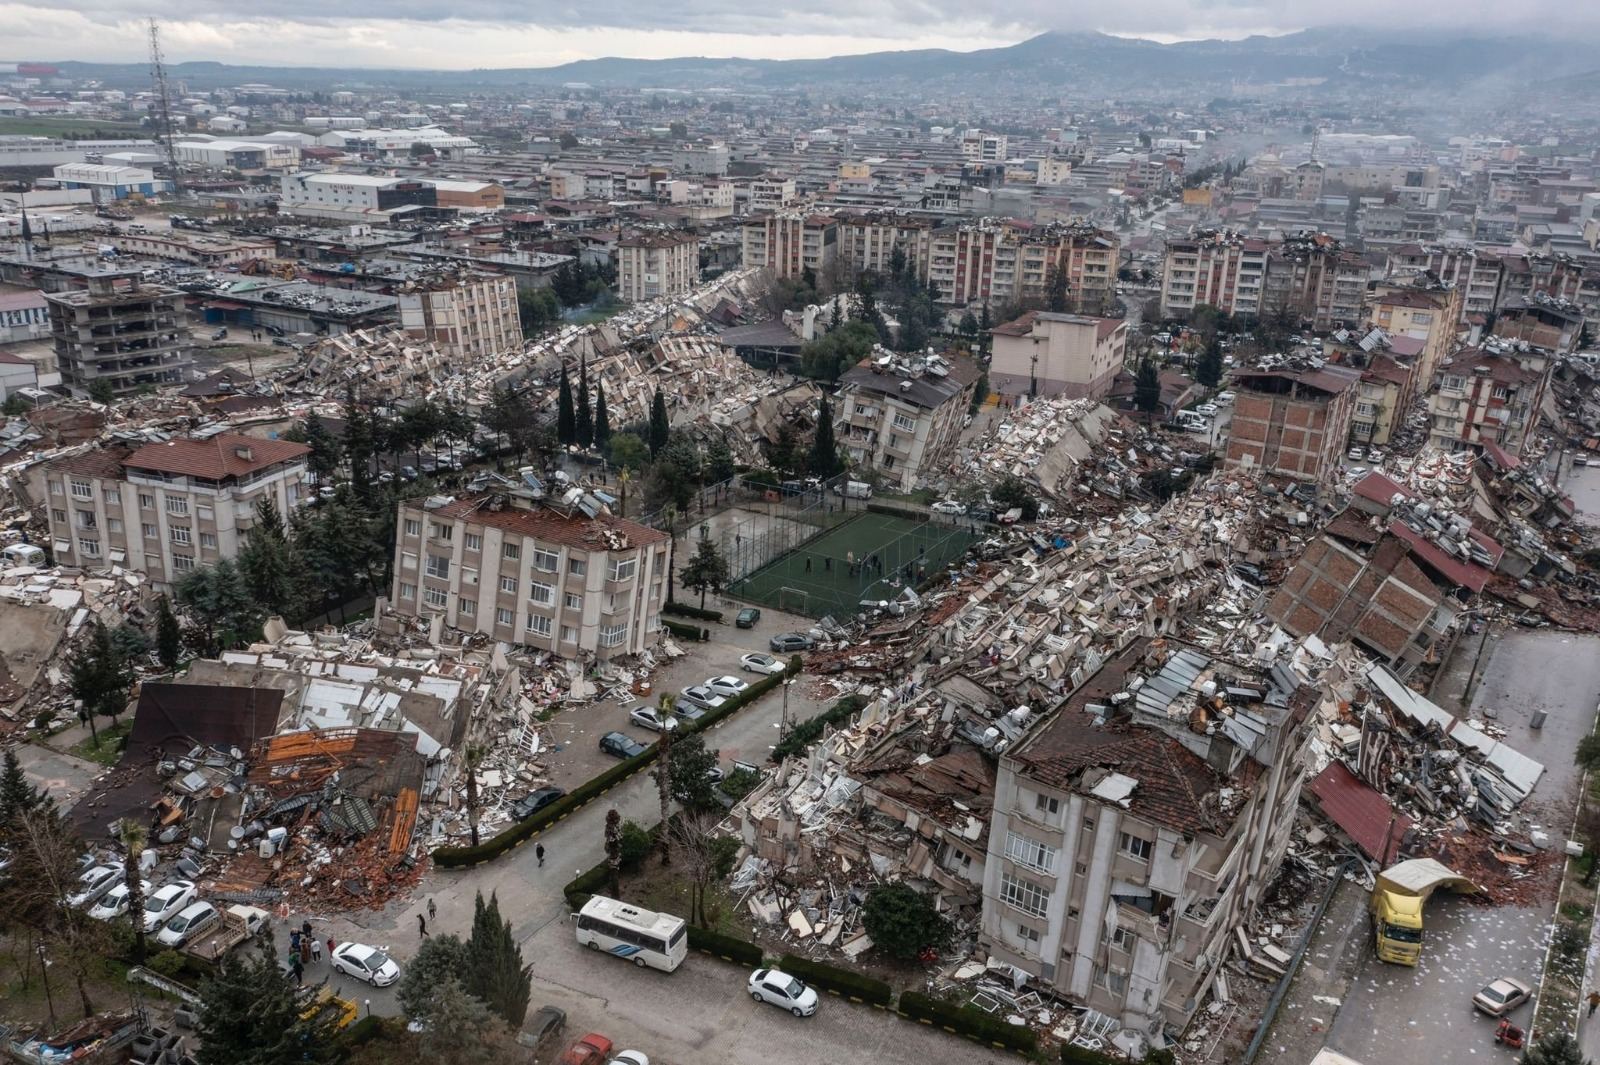 Türkiye earthquake death toll rises to 12,873